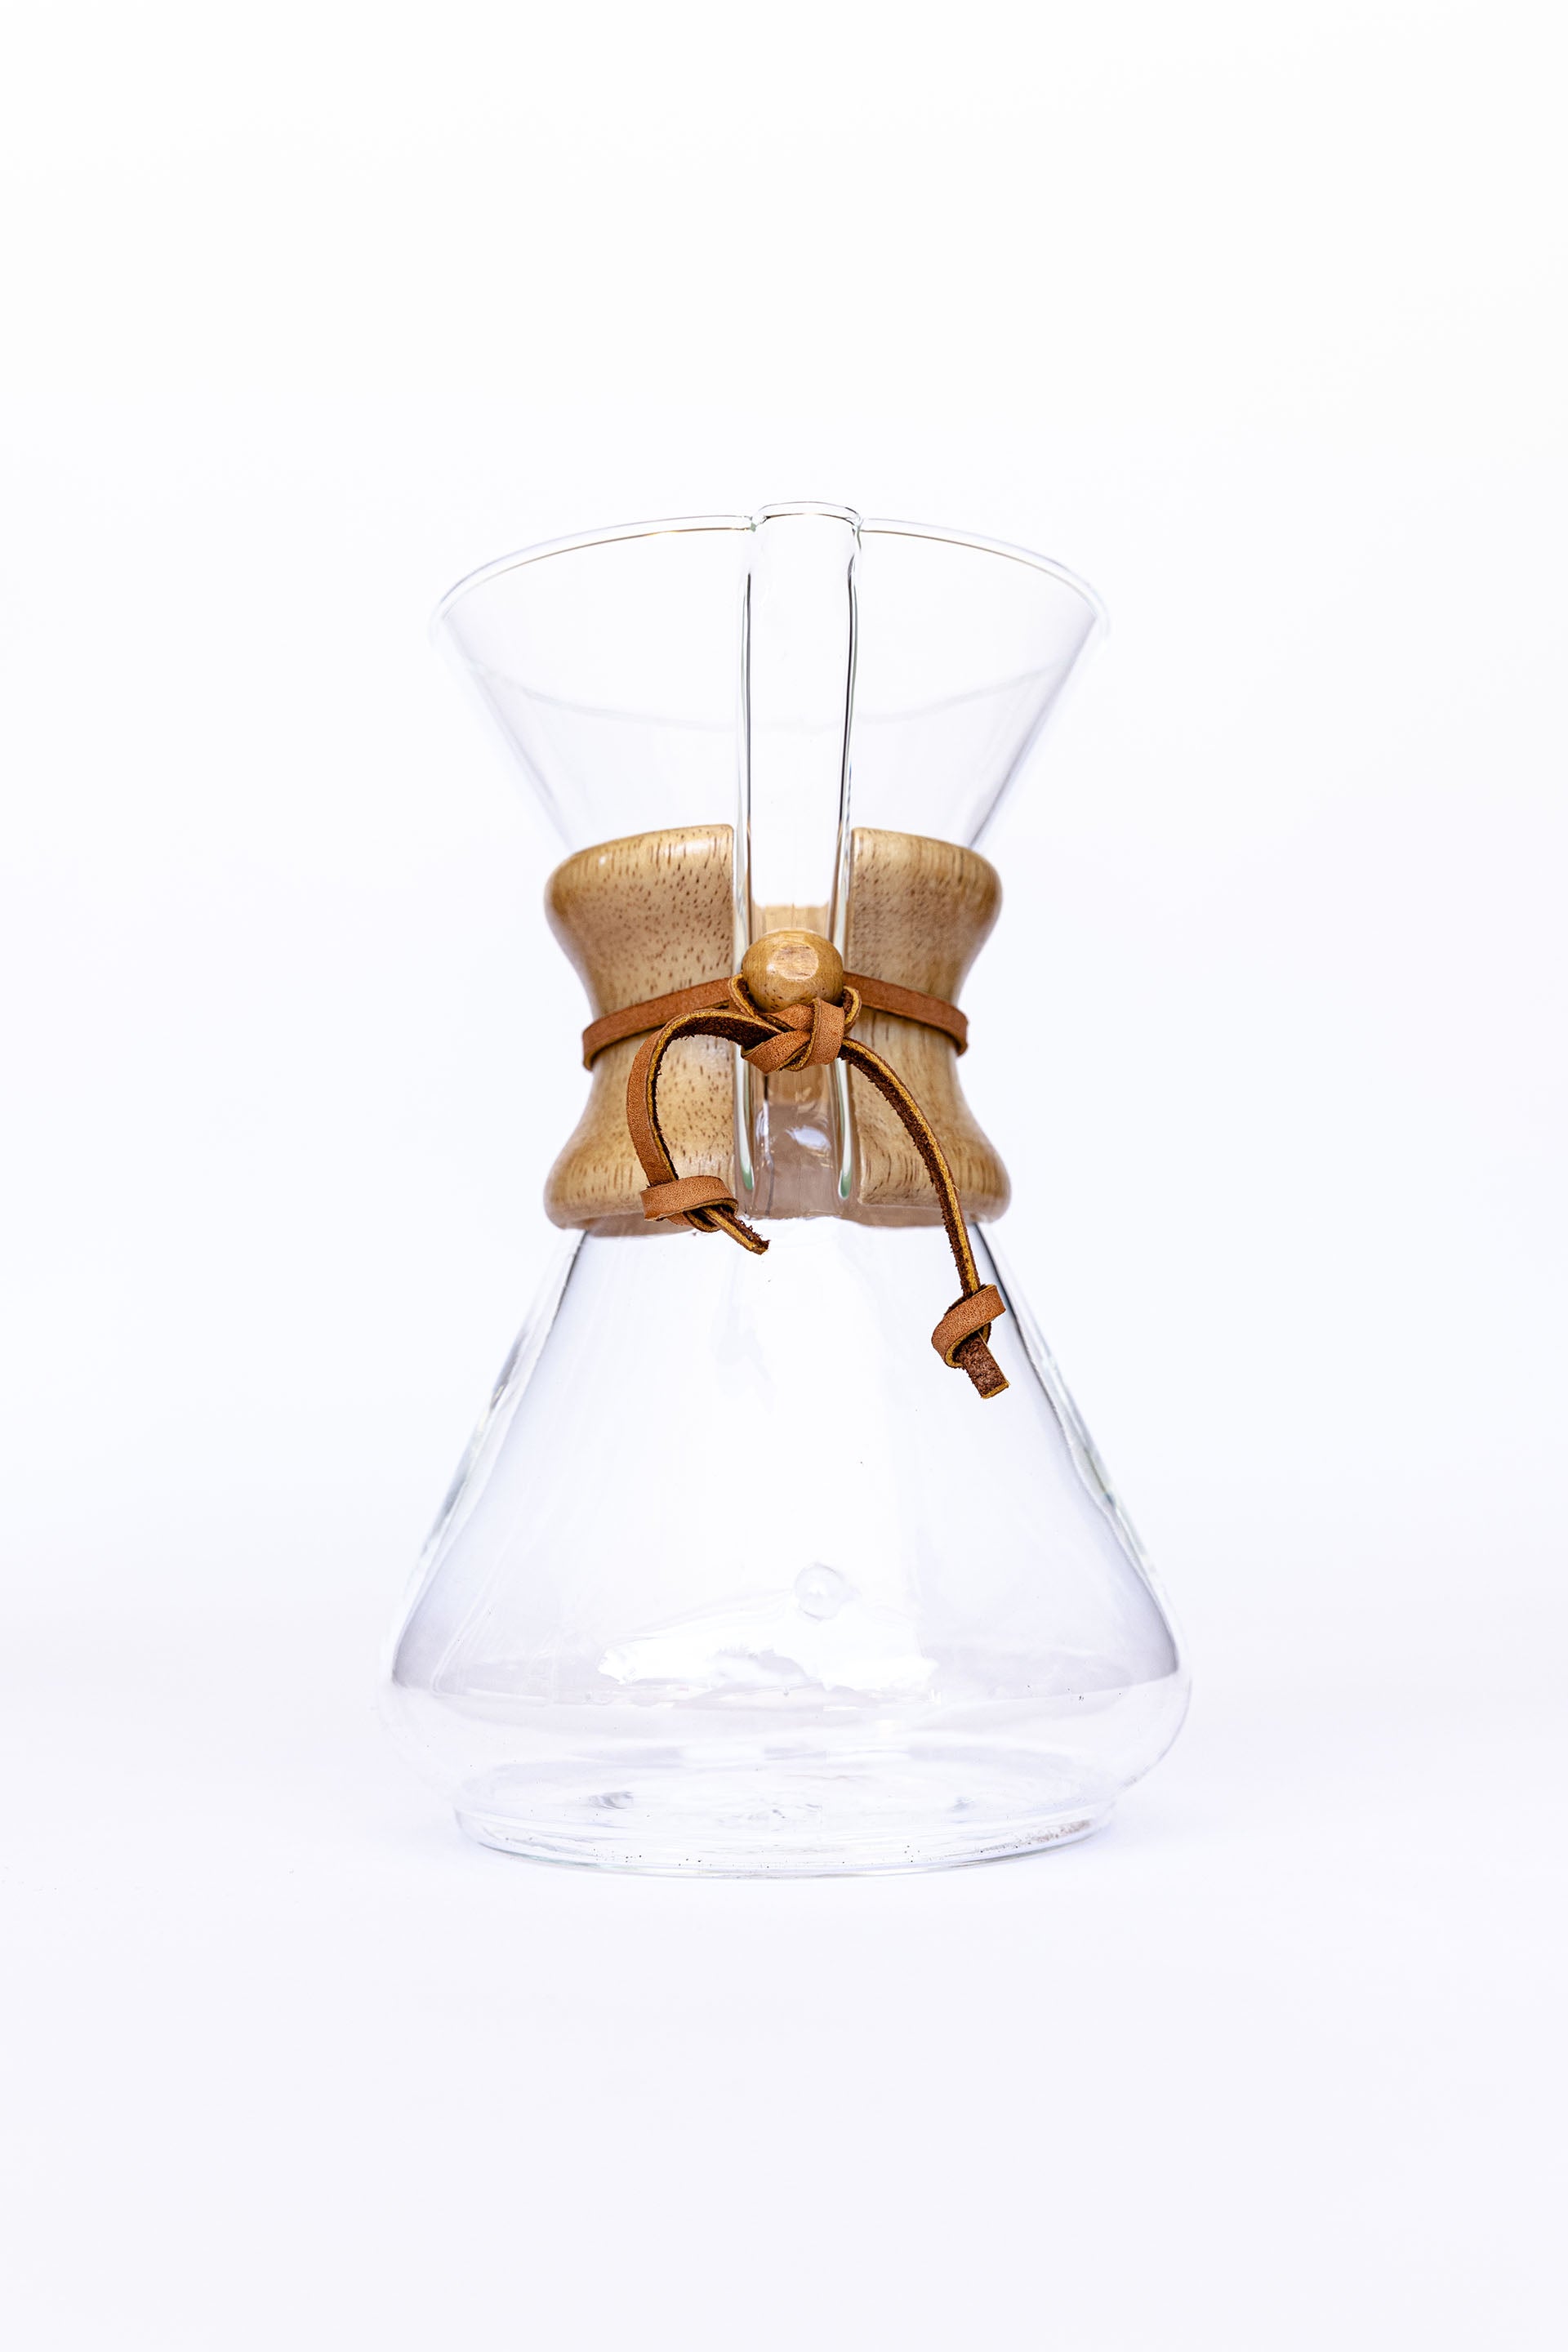 Chemex Coffee Maker- Glass Handle - 3 Cup / 15oz.